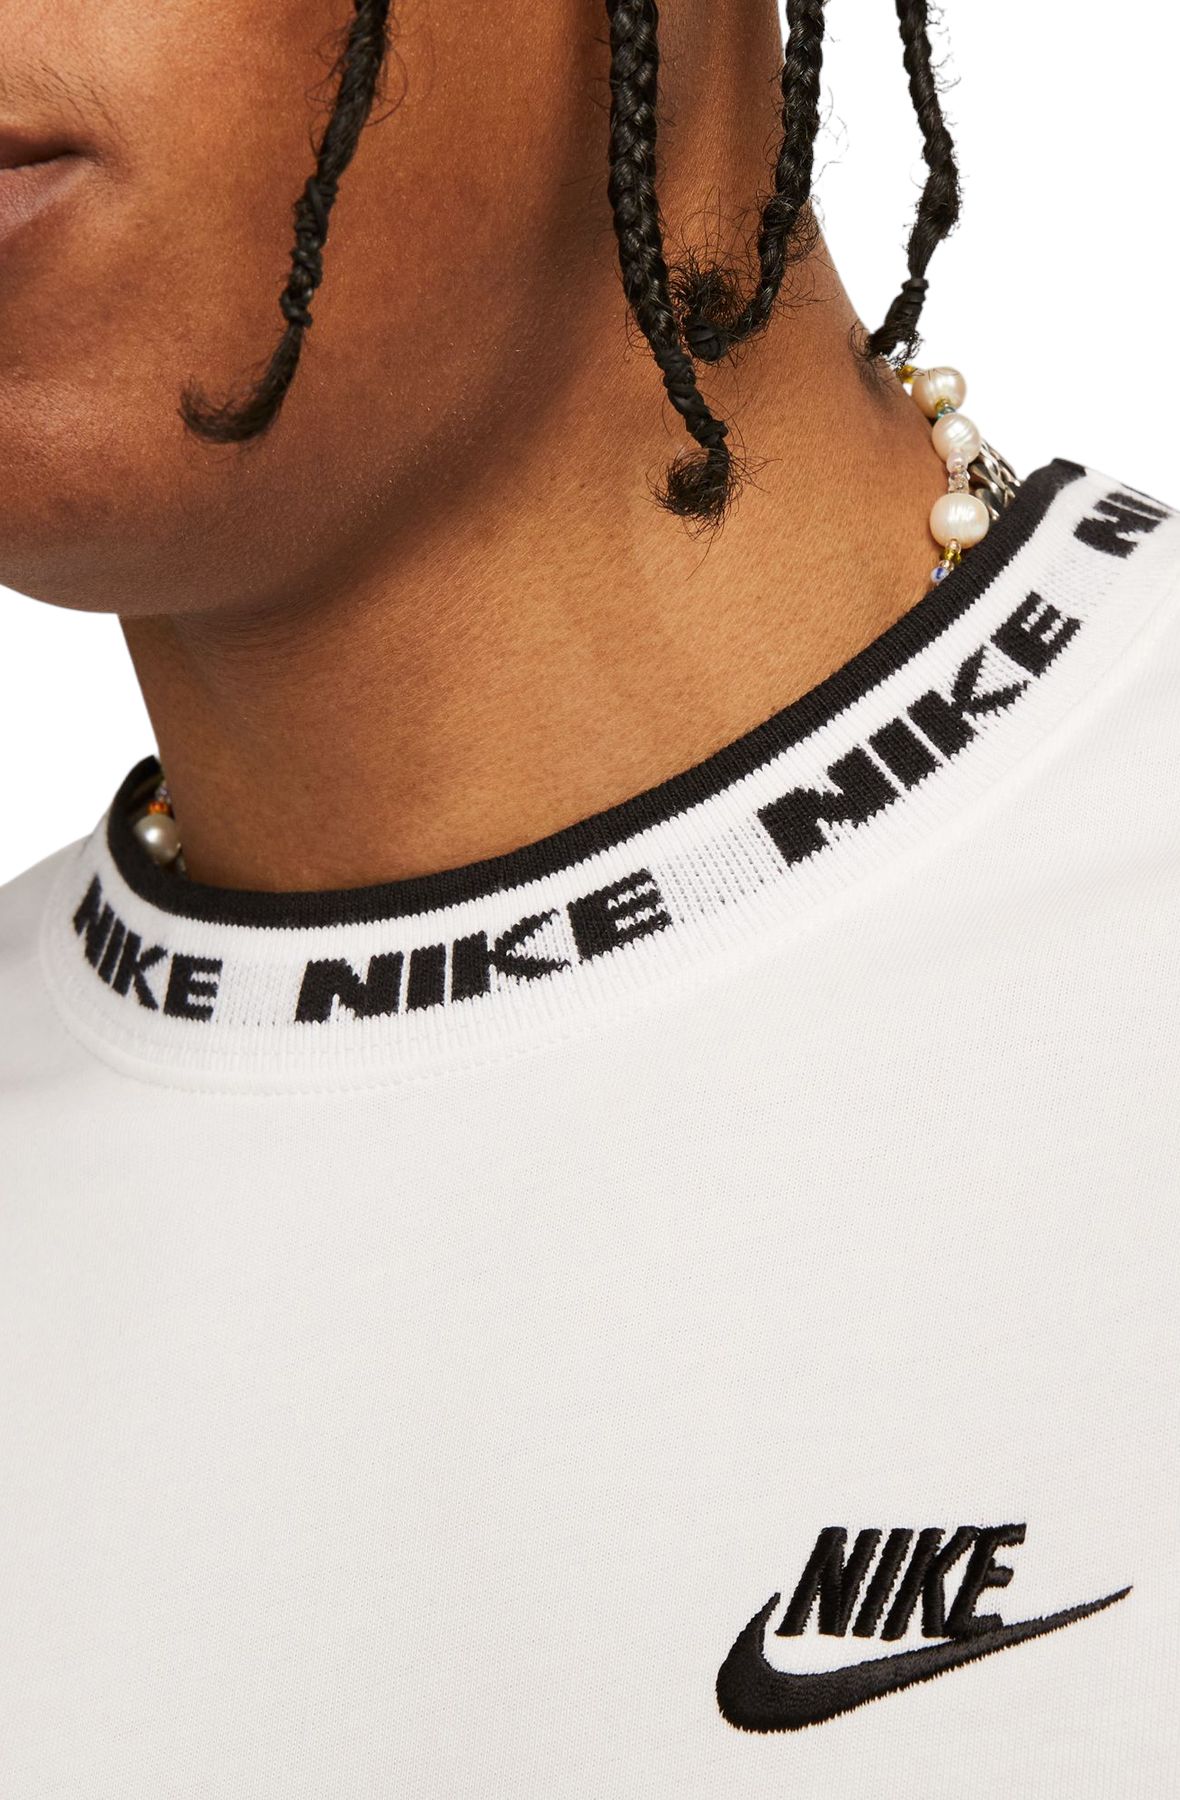 NIKE Sportswear Club Short-Sleeve Top FB7309 100 - Shiekh